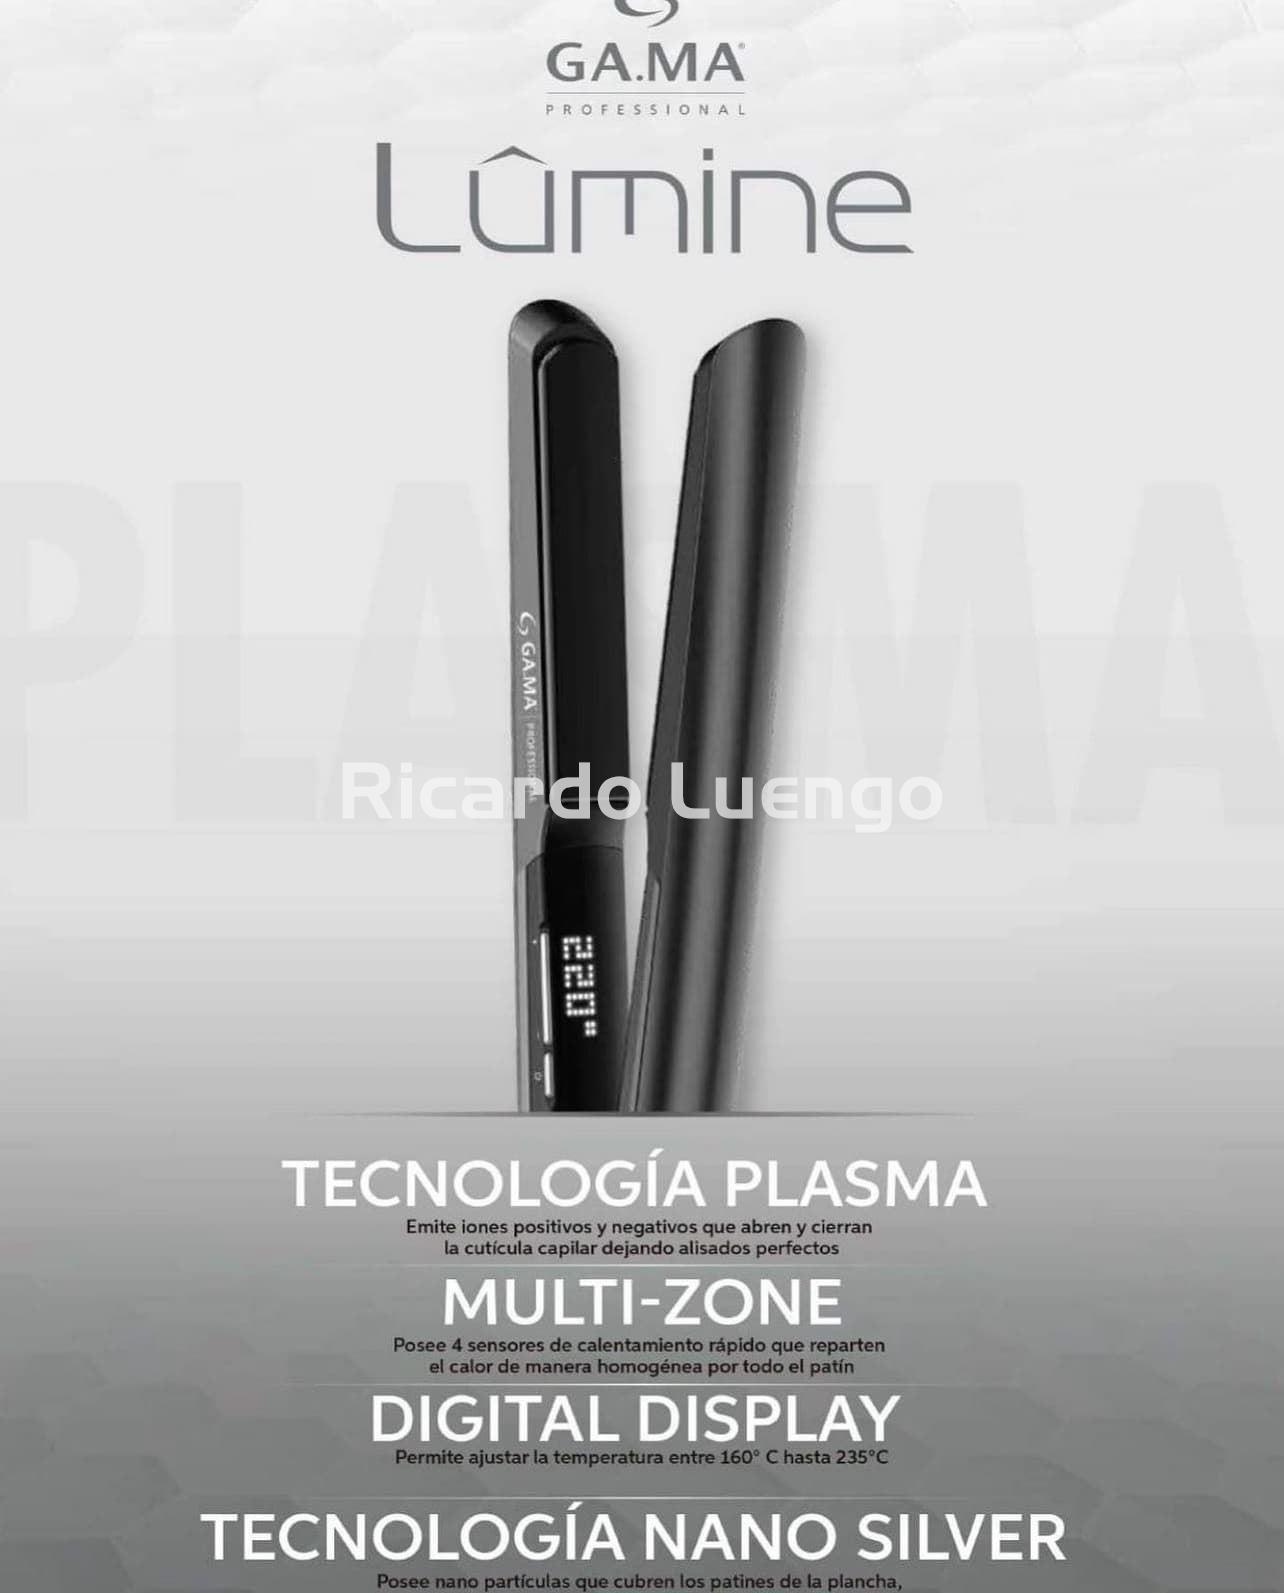 Plancha Lumine Gama italy - Imagen 3